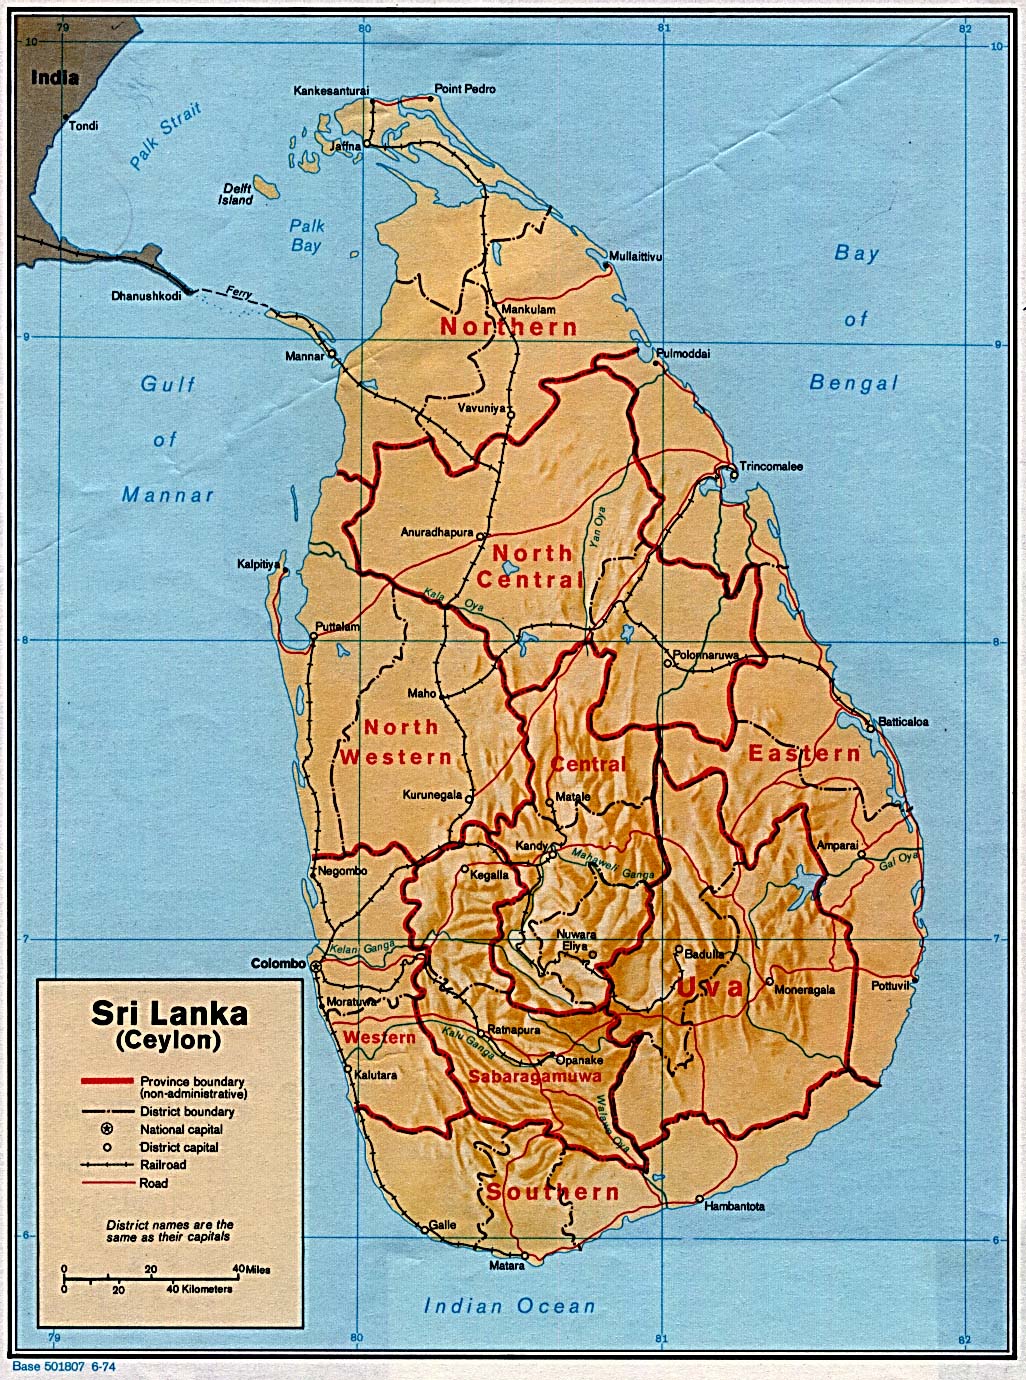 Sri Lanka Weltkarte - Colombo, Capital City of Sri Lanka, in the Indian